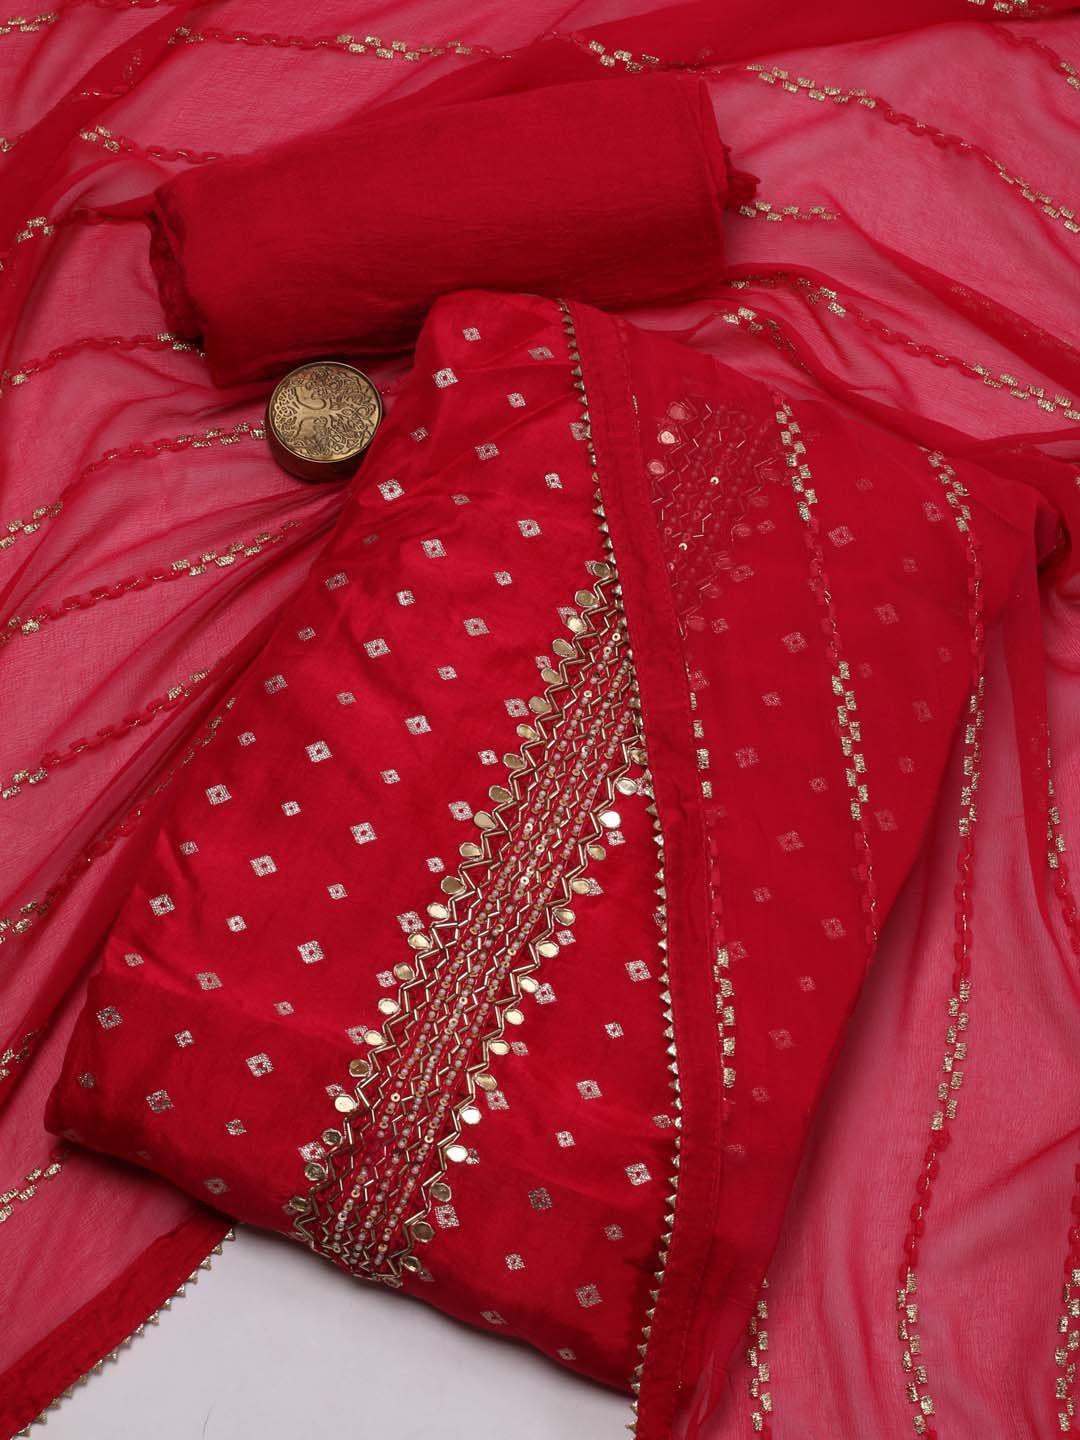 meena bazaar geometric woven design beads and stones unstitched dress material